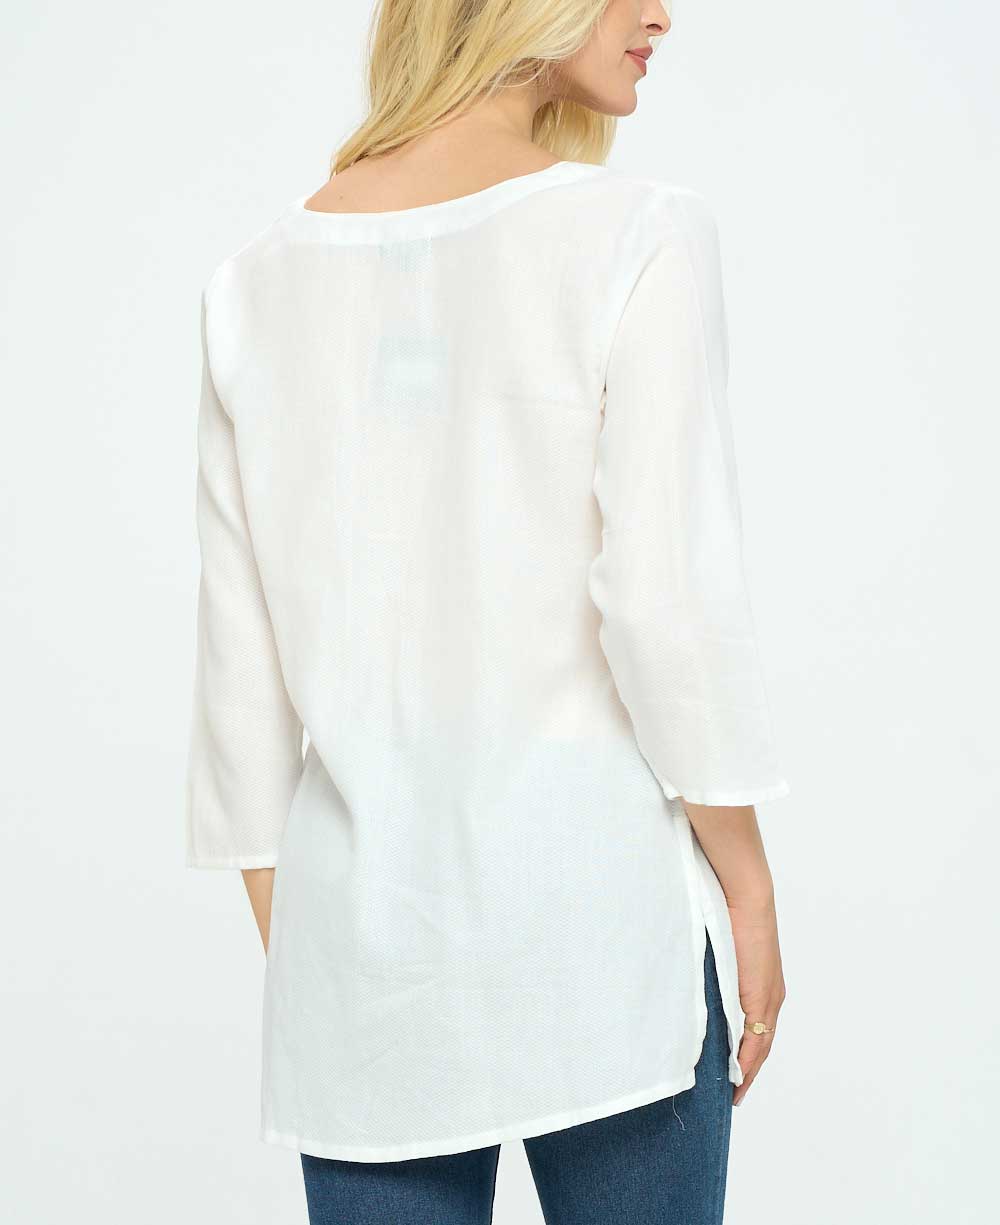 Chakra Design White Woven Lightweight Cotton Tunic Top - Shirts & Tops S